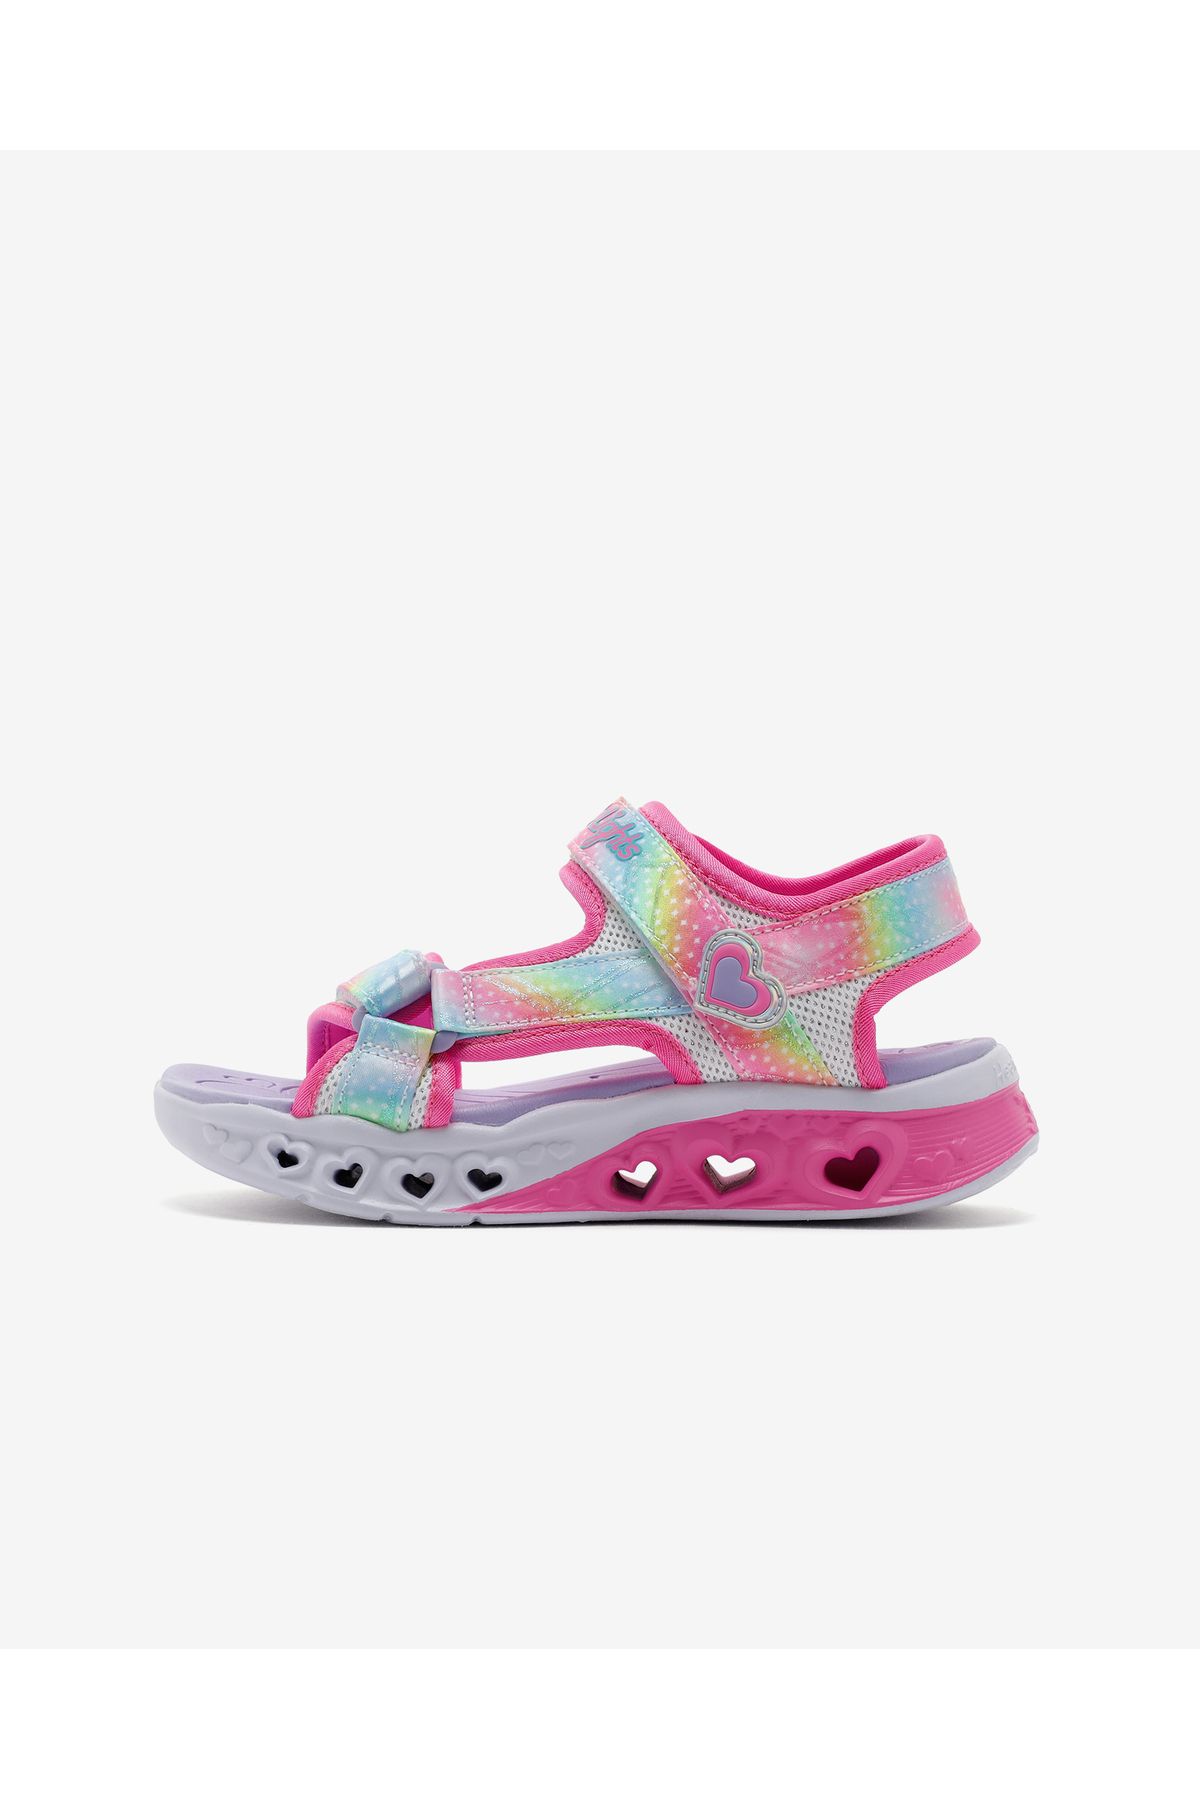 Skechers Flutter Hearts Sandal  -  Twili Büyük Kız Çocuk Beyaz Sandalet 303105L Wmlt